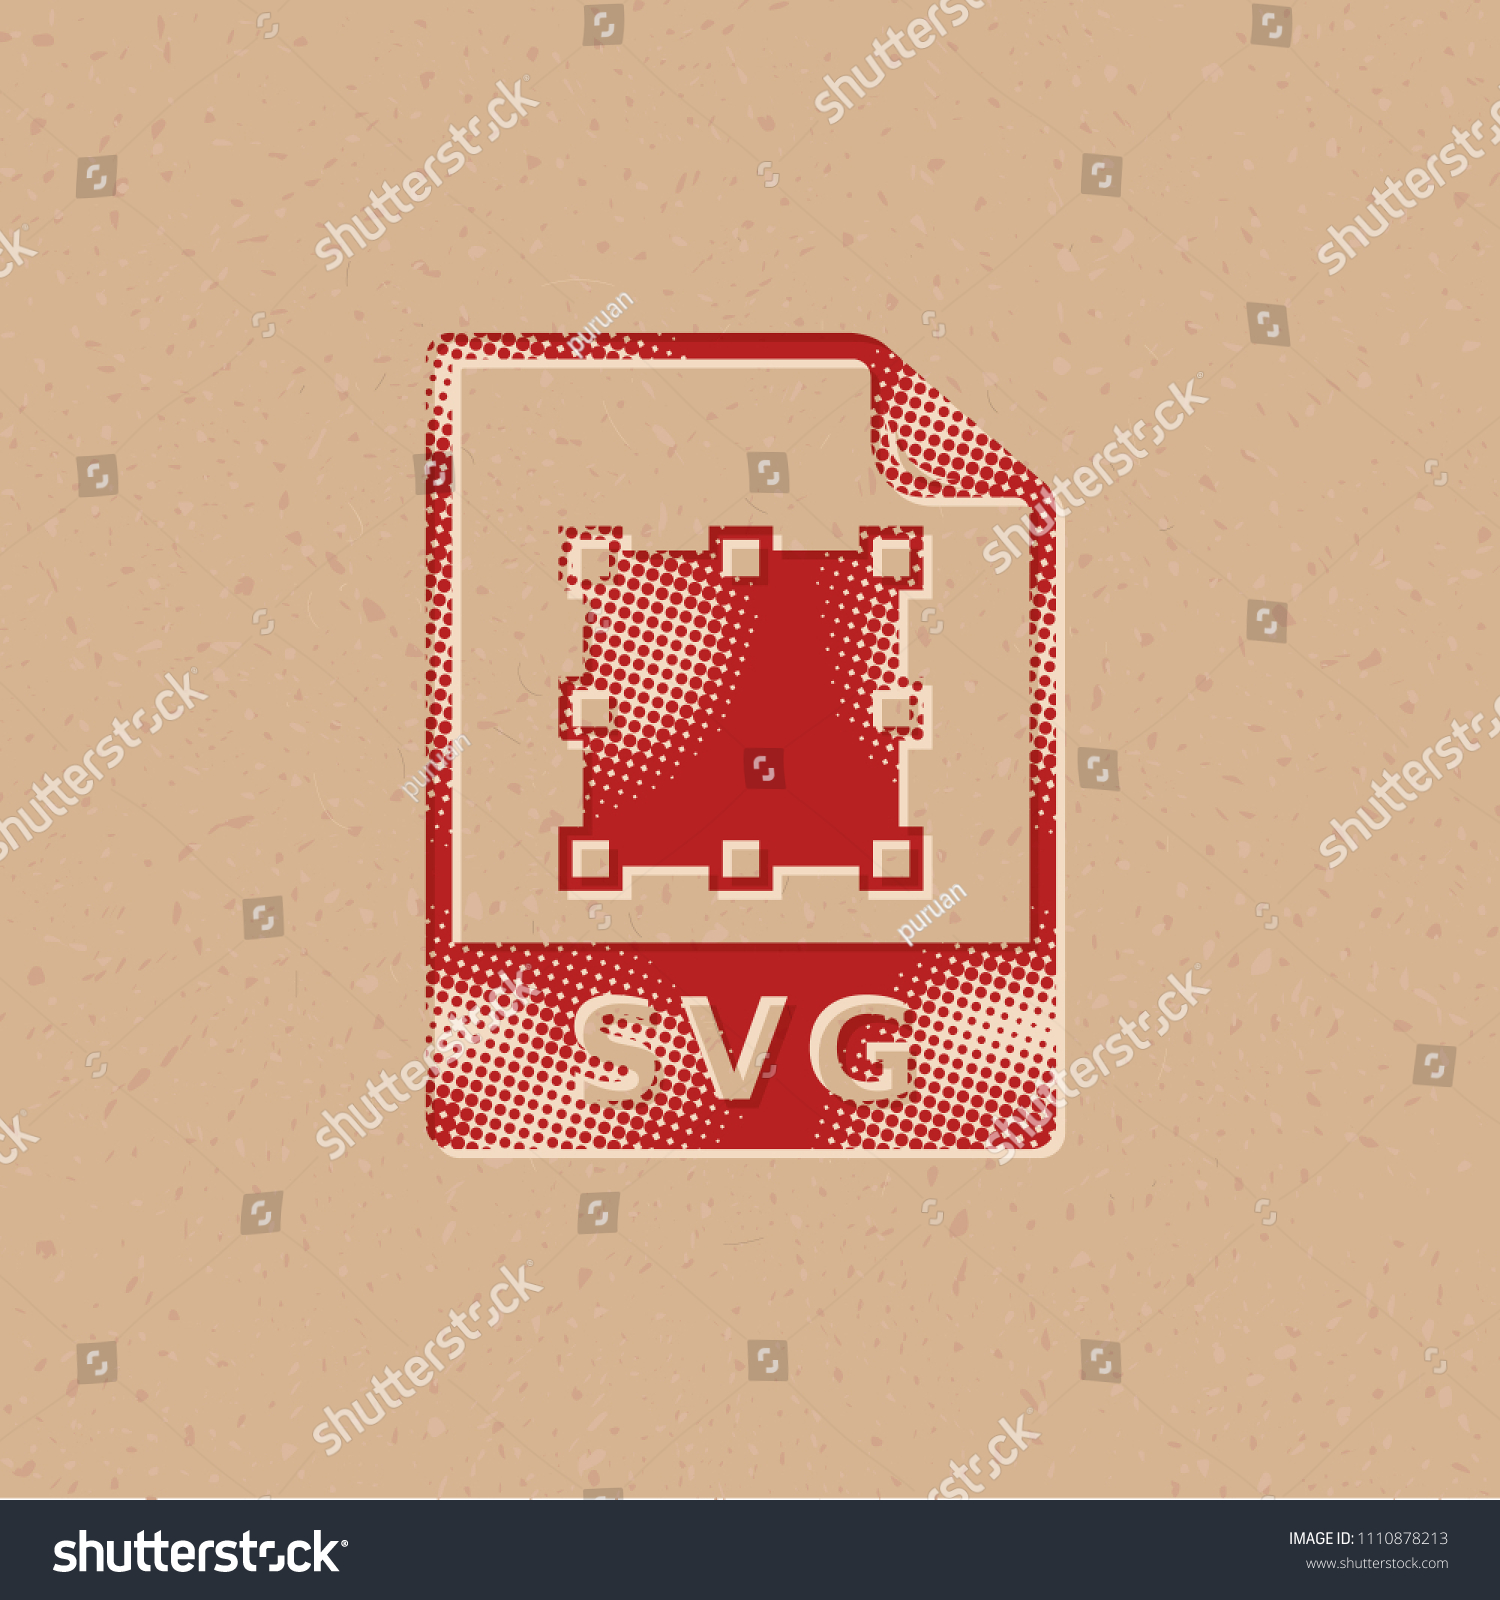 SVG of SVG file icon in halftone style. Grunge background vector illustration. svg